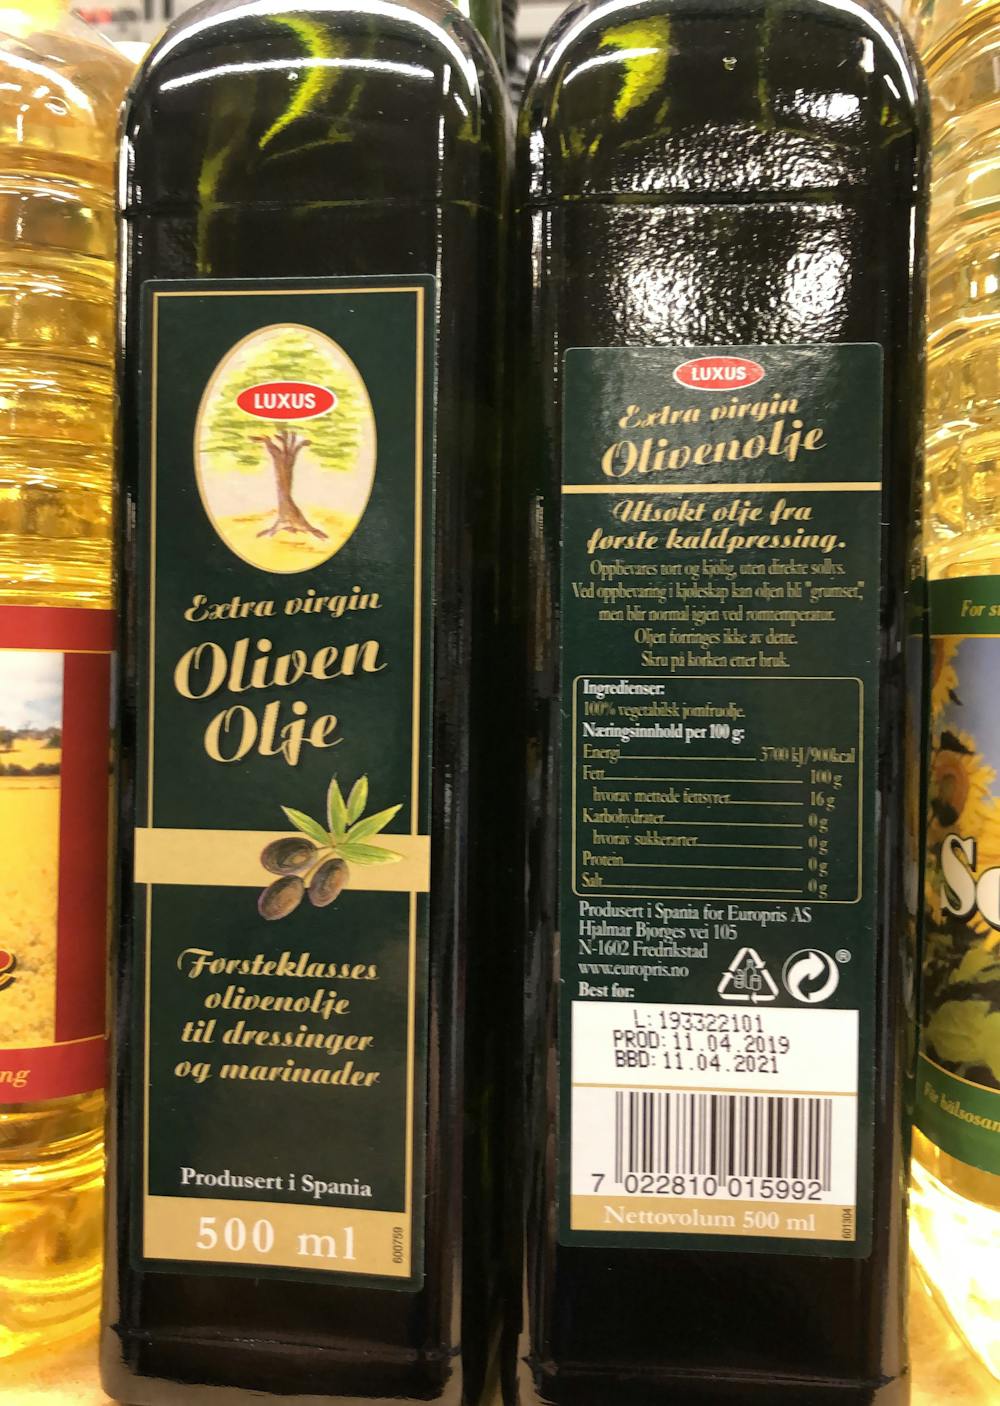 Extra virgin Olivenolje, Luxus